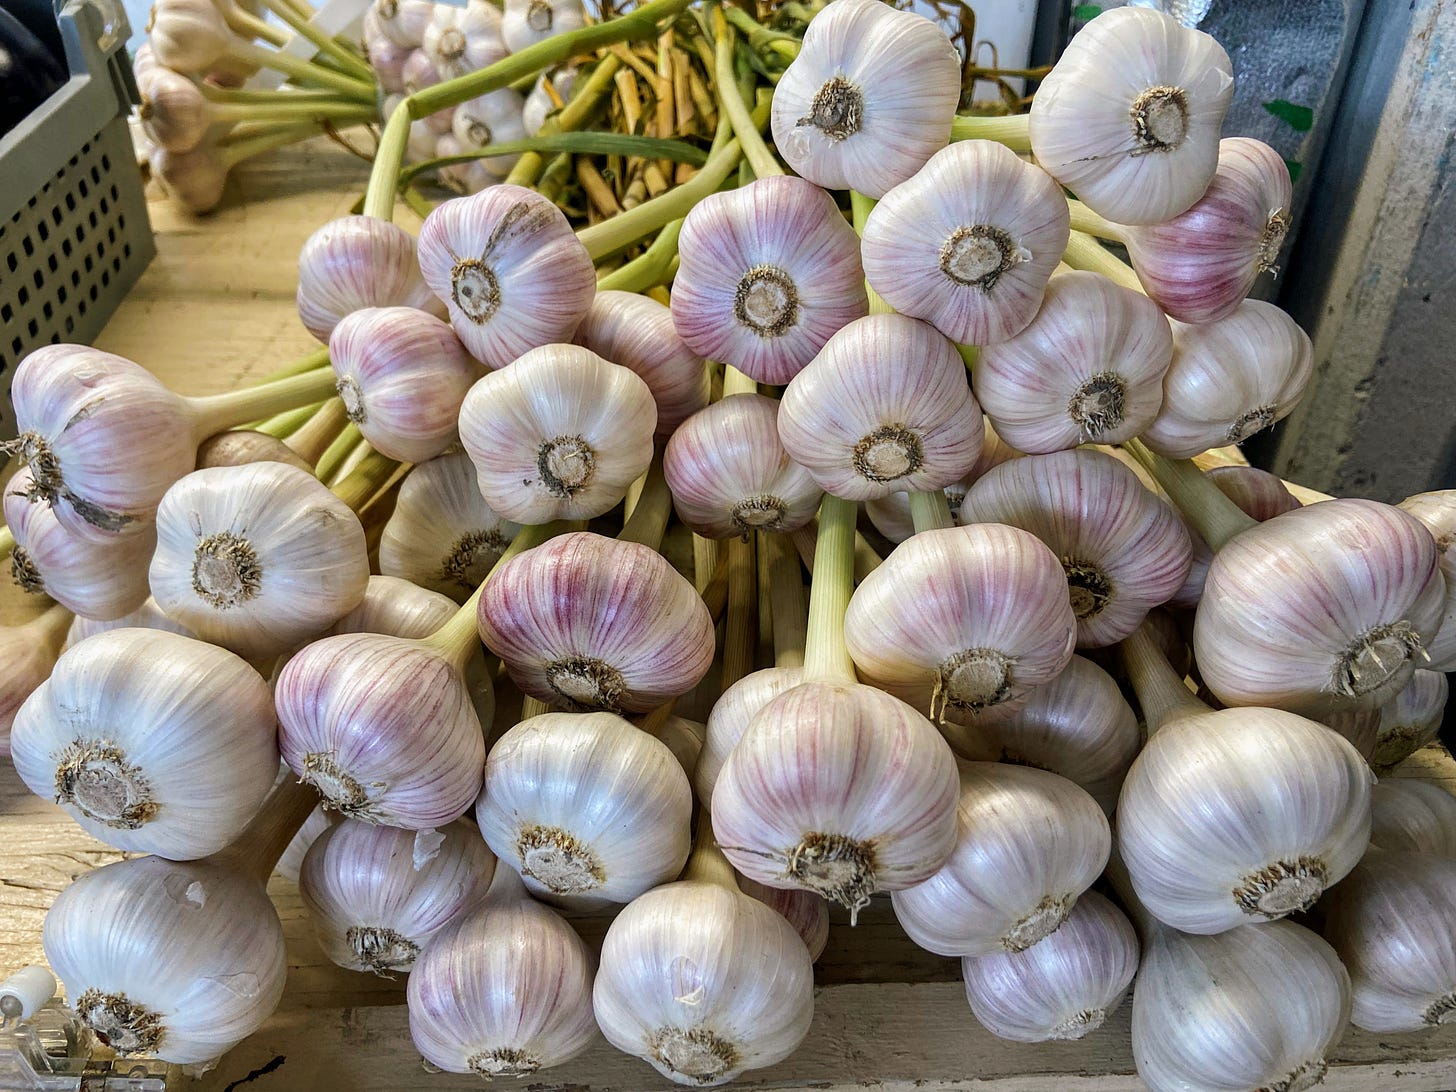 bunches of nice-looking garlic